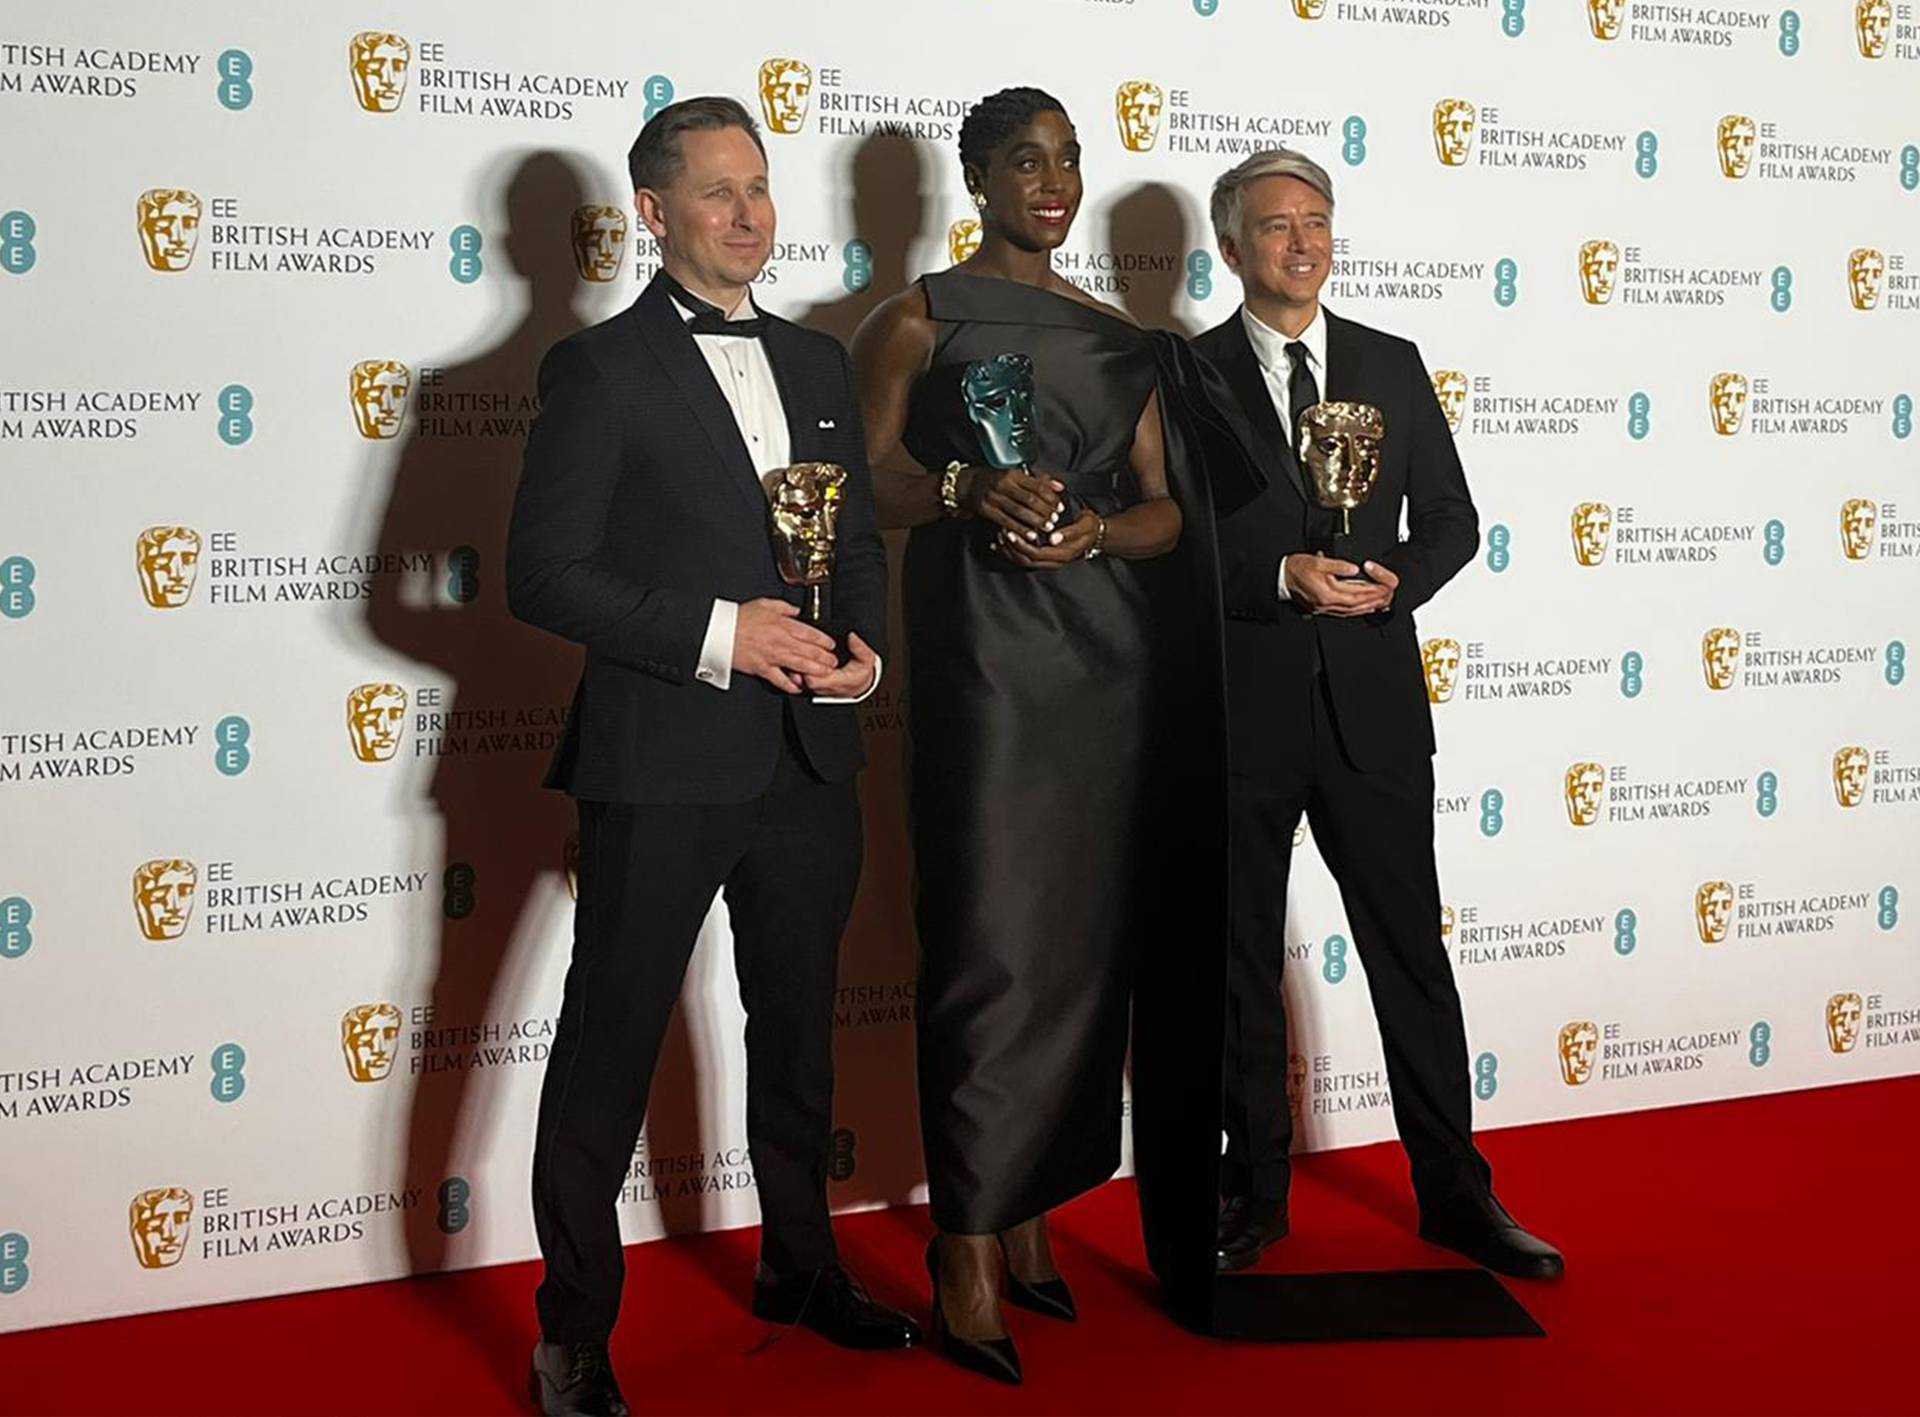 Bond At The BAFTA Awards